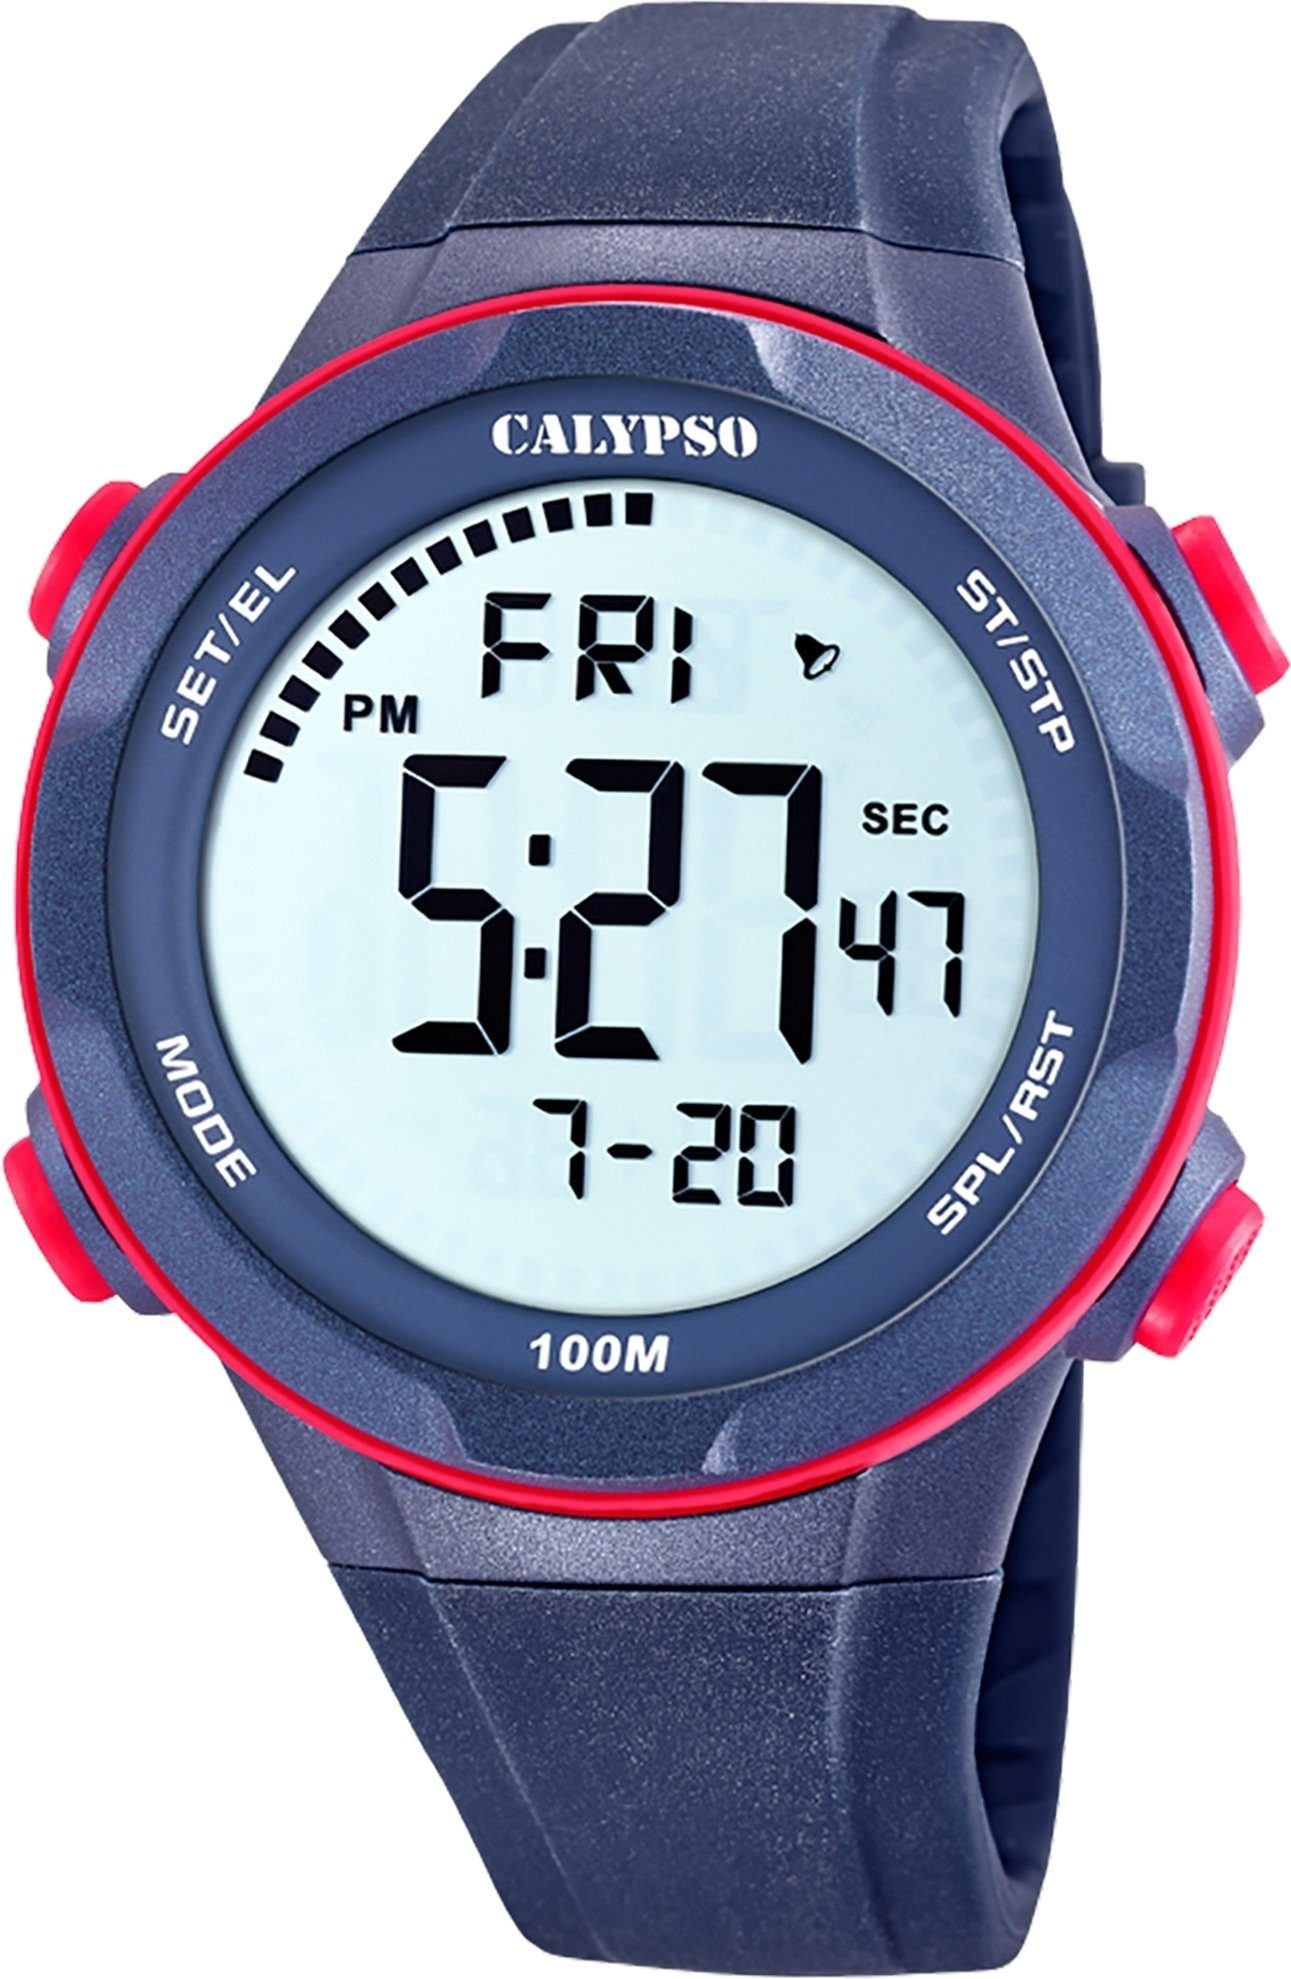 CALYPSO WATCHES Calypso rund, Armbanduhr Digitaluhr Uhr Jugend Jugend blau, Kunststoffarmband Herren Digital, Herren, Casual